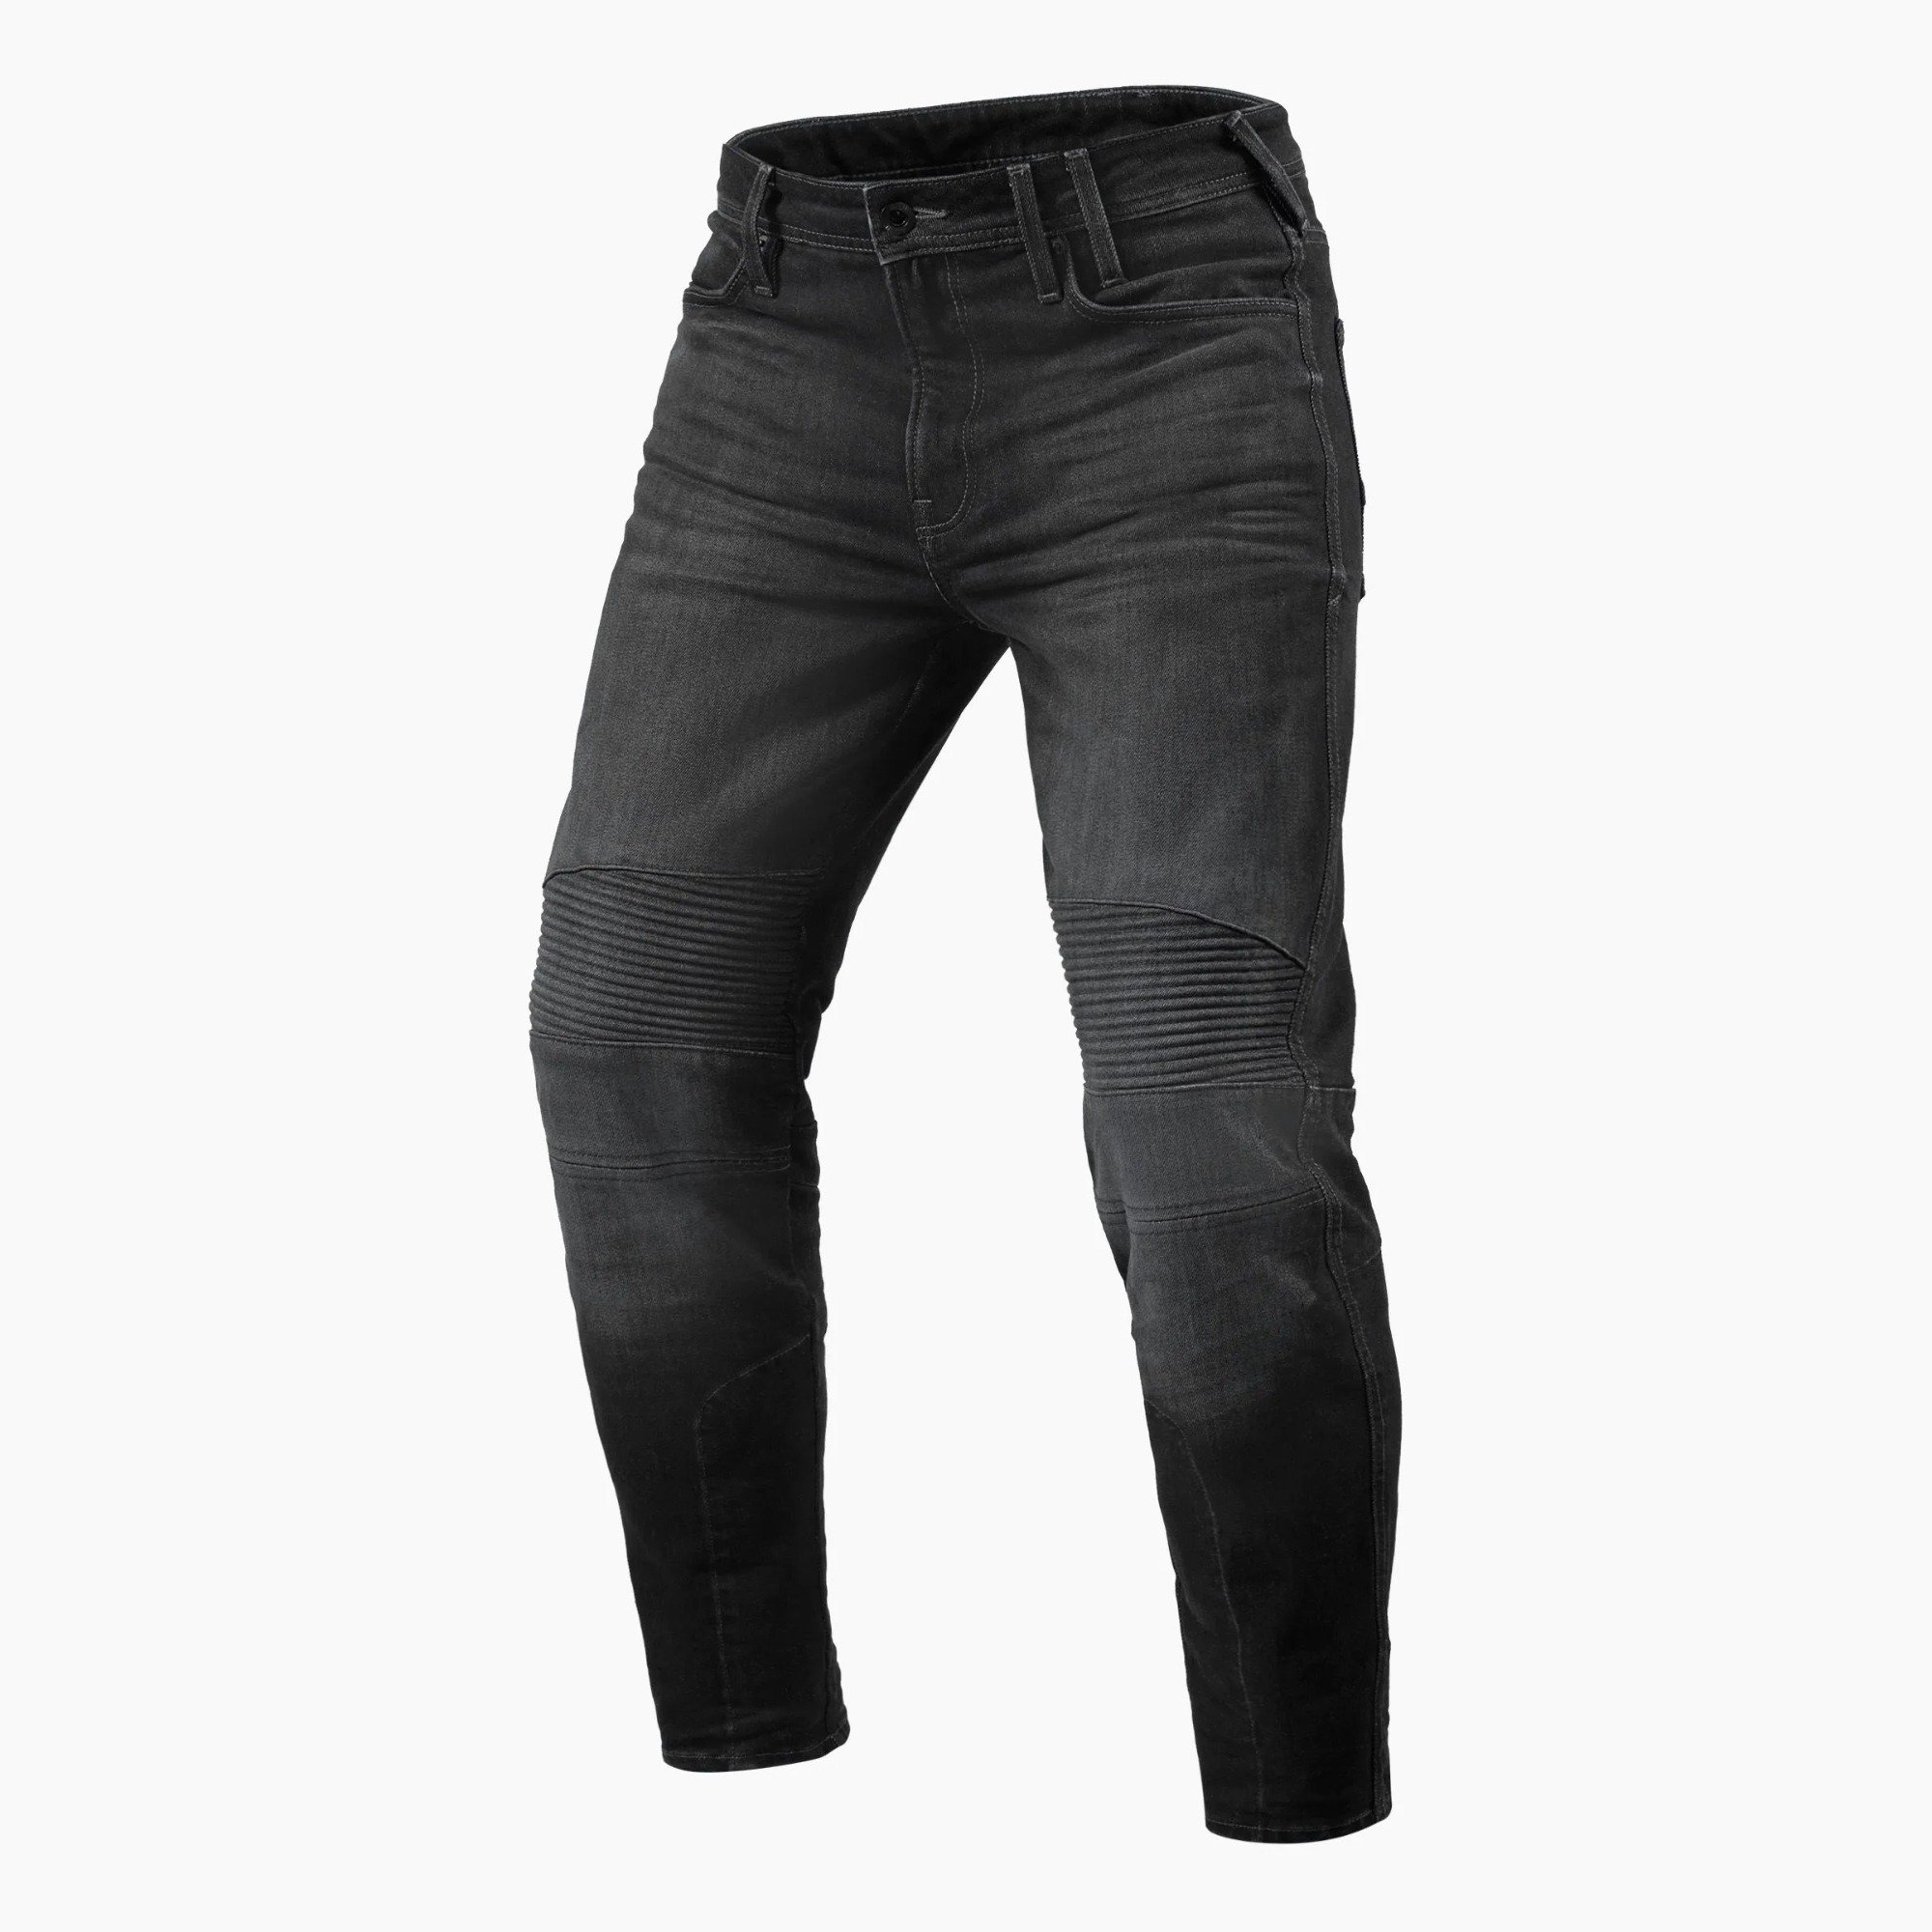 Image of REV'IT! Jeans Moto 2 TF Dark Grey Used Motorcycle Jeans Talla L34/W38